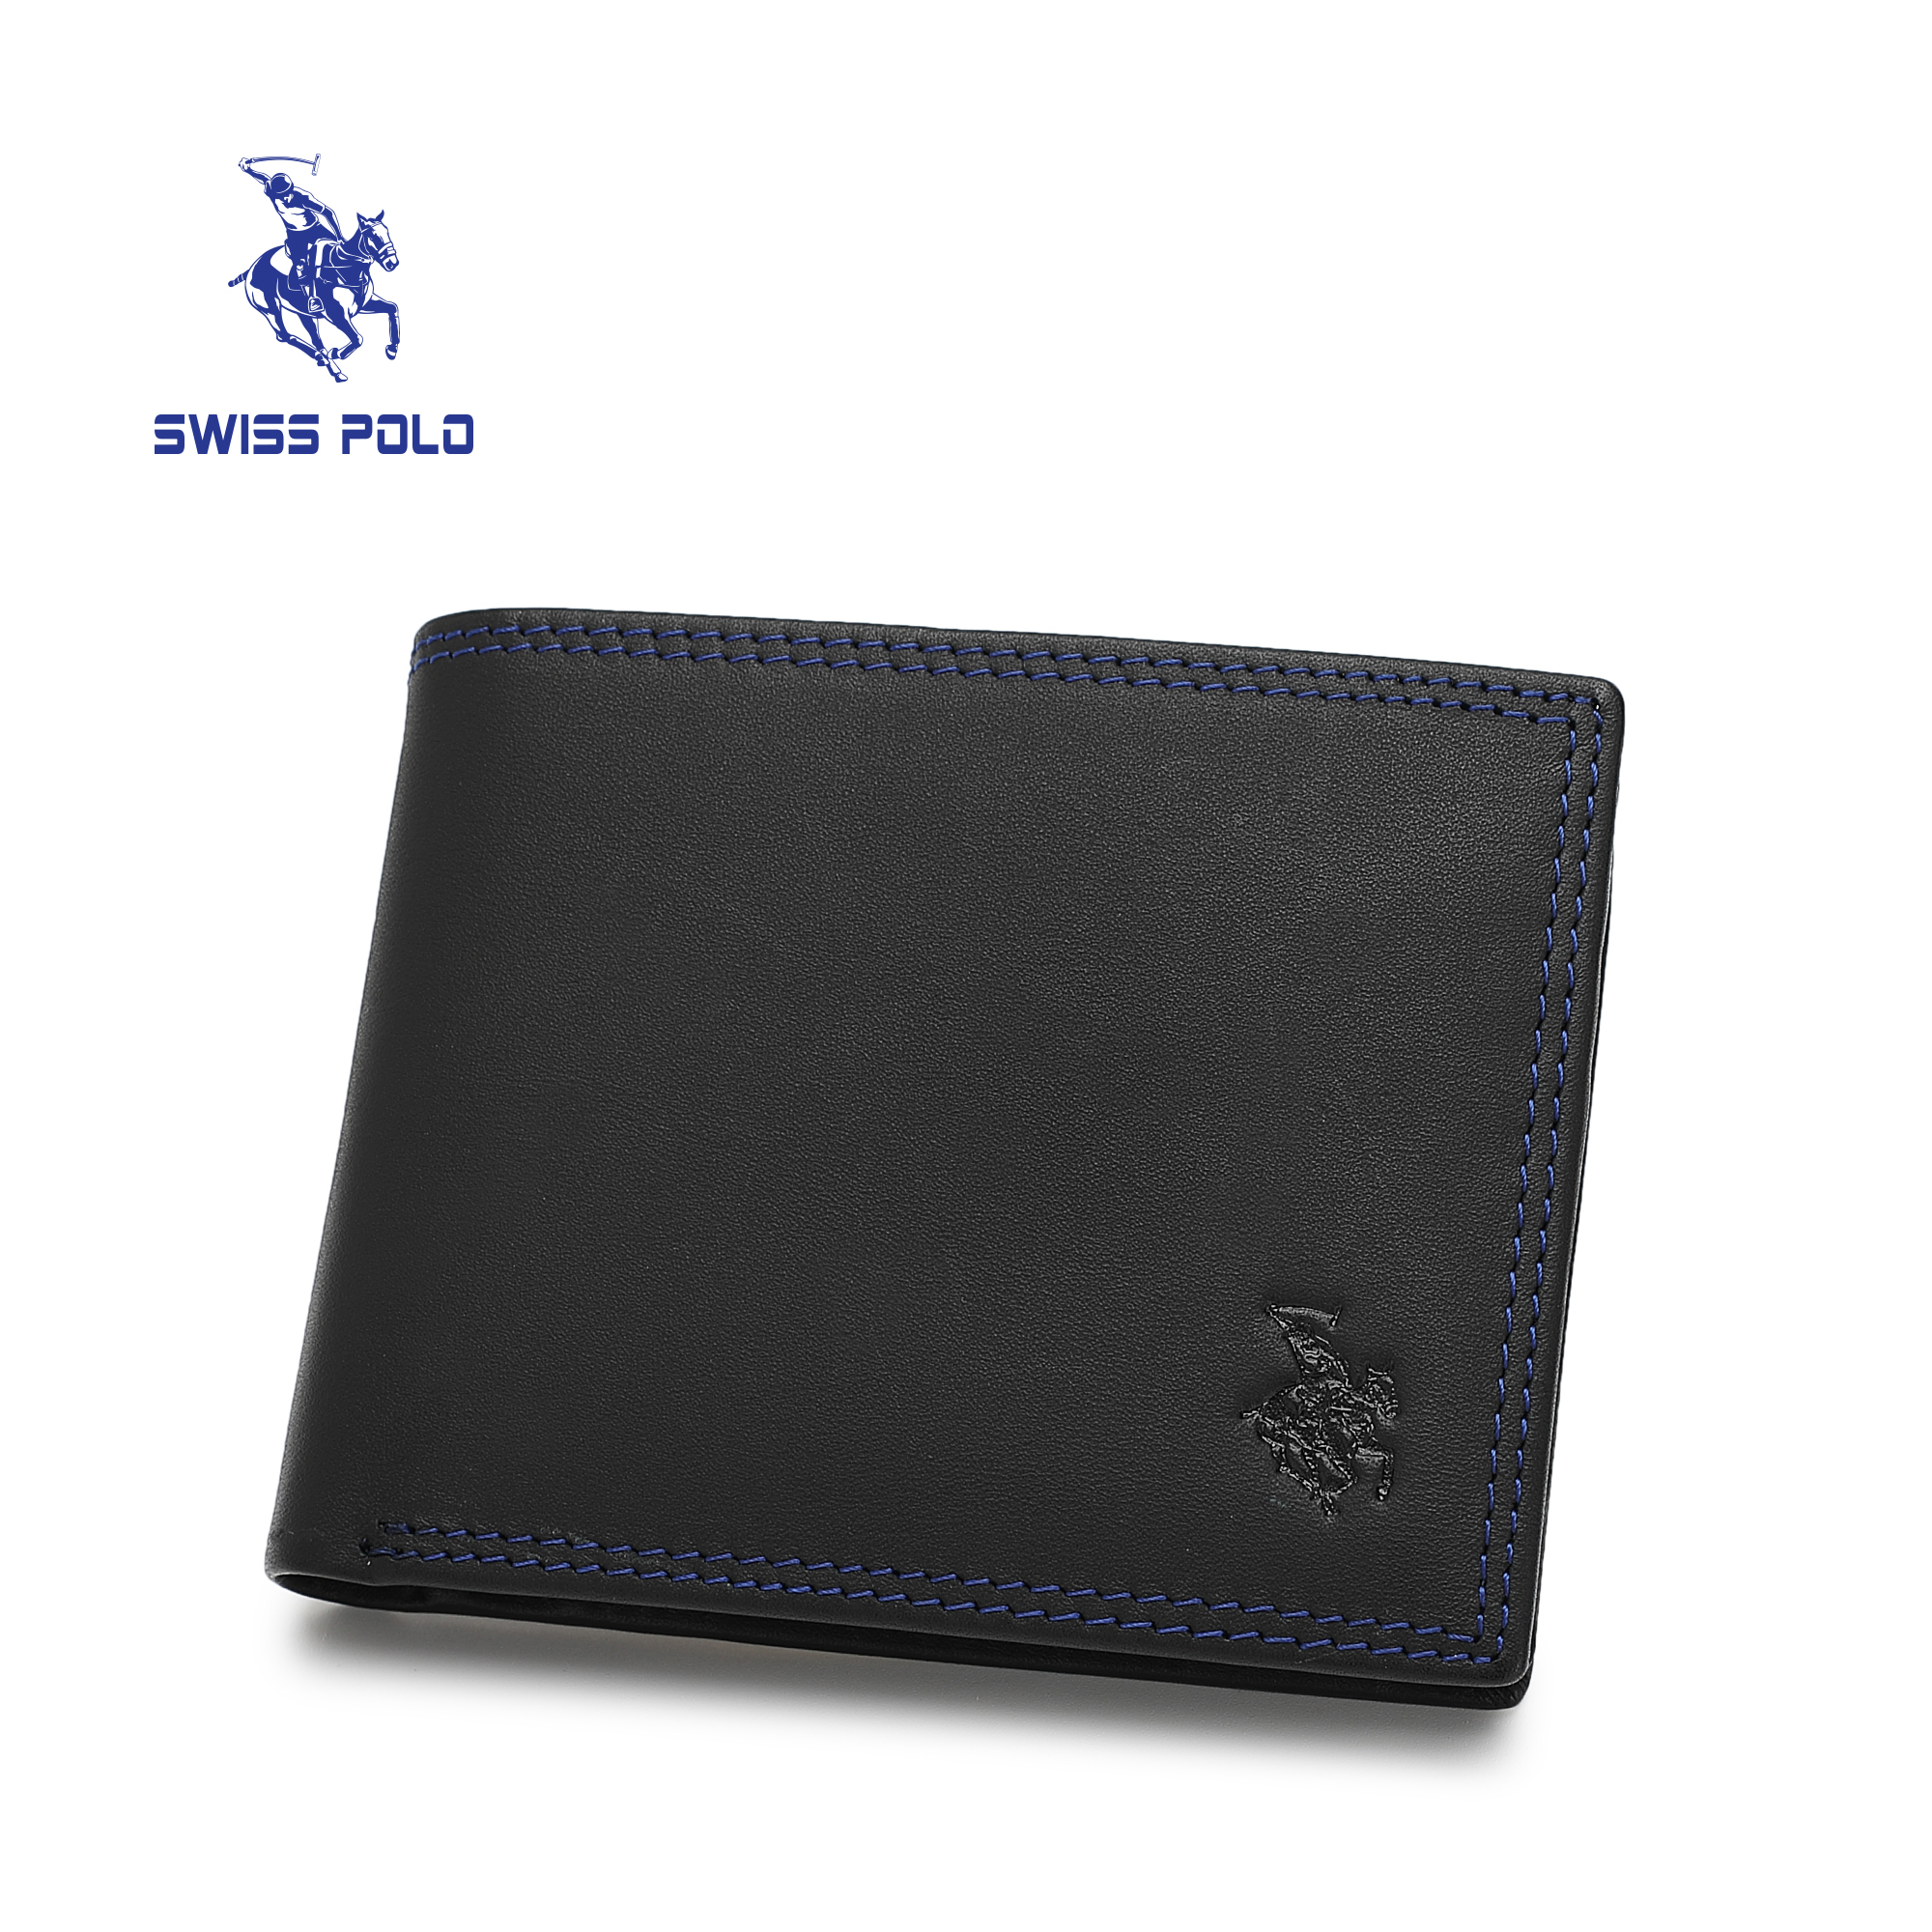 SWISS POLO Genuine Leather RFID Short Wallet SW 181-4 BLACK